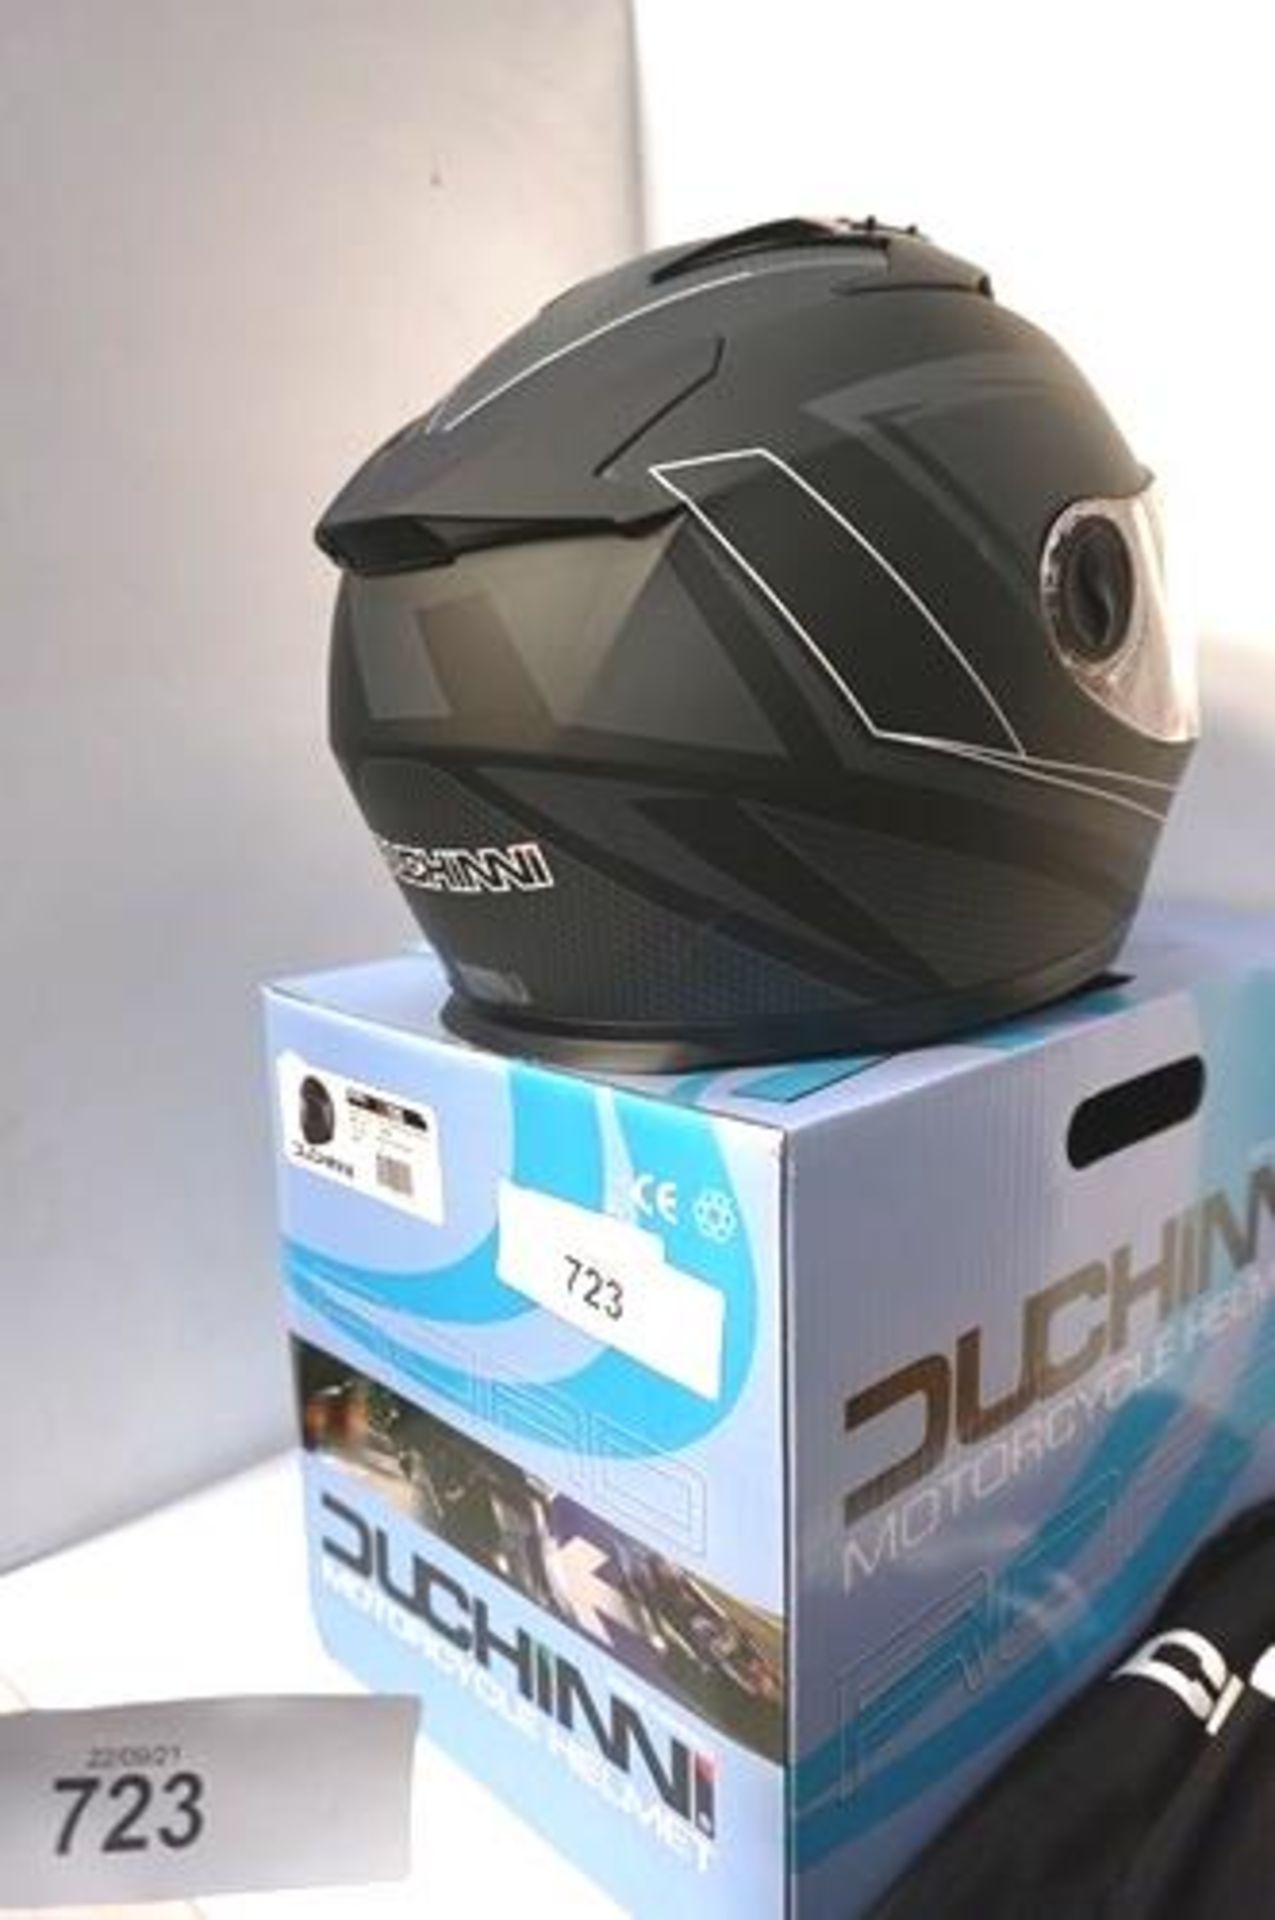 1 x Duchinni M black/gun motorcycle helmet, model D705, size LA - New in box (GS15) - Image 2 of 2